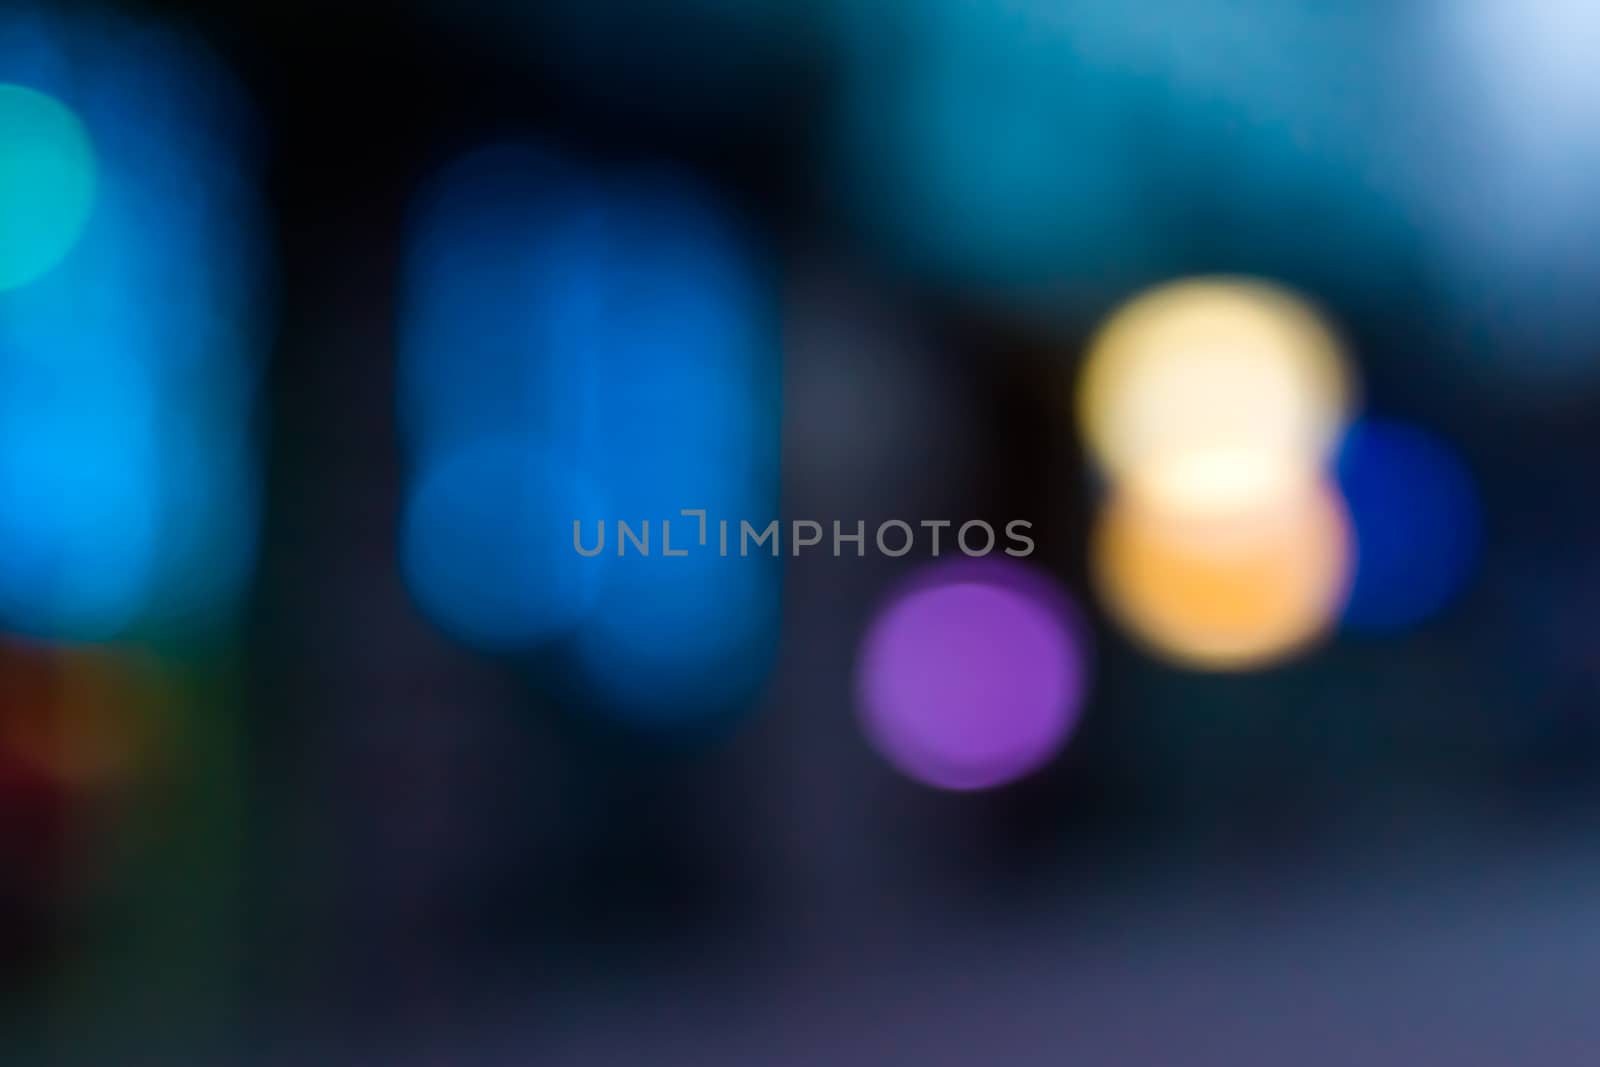 abstract blur urban street lighting by Pellinni